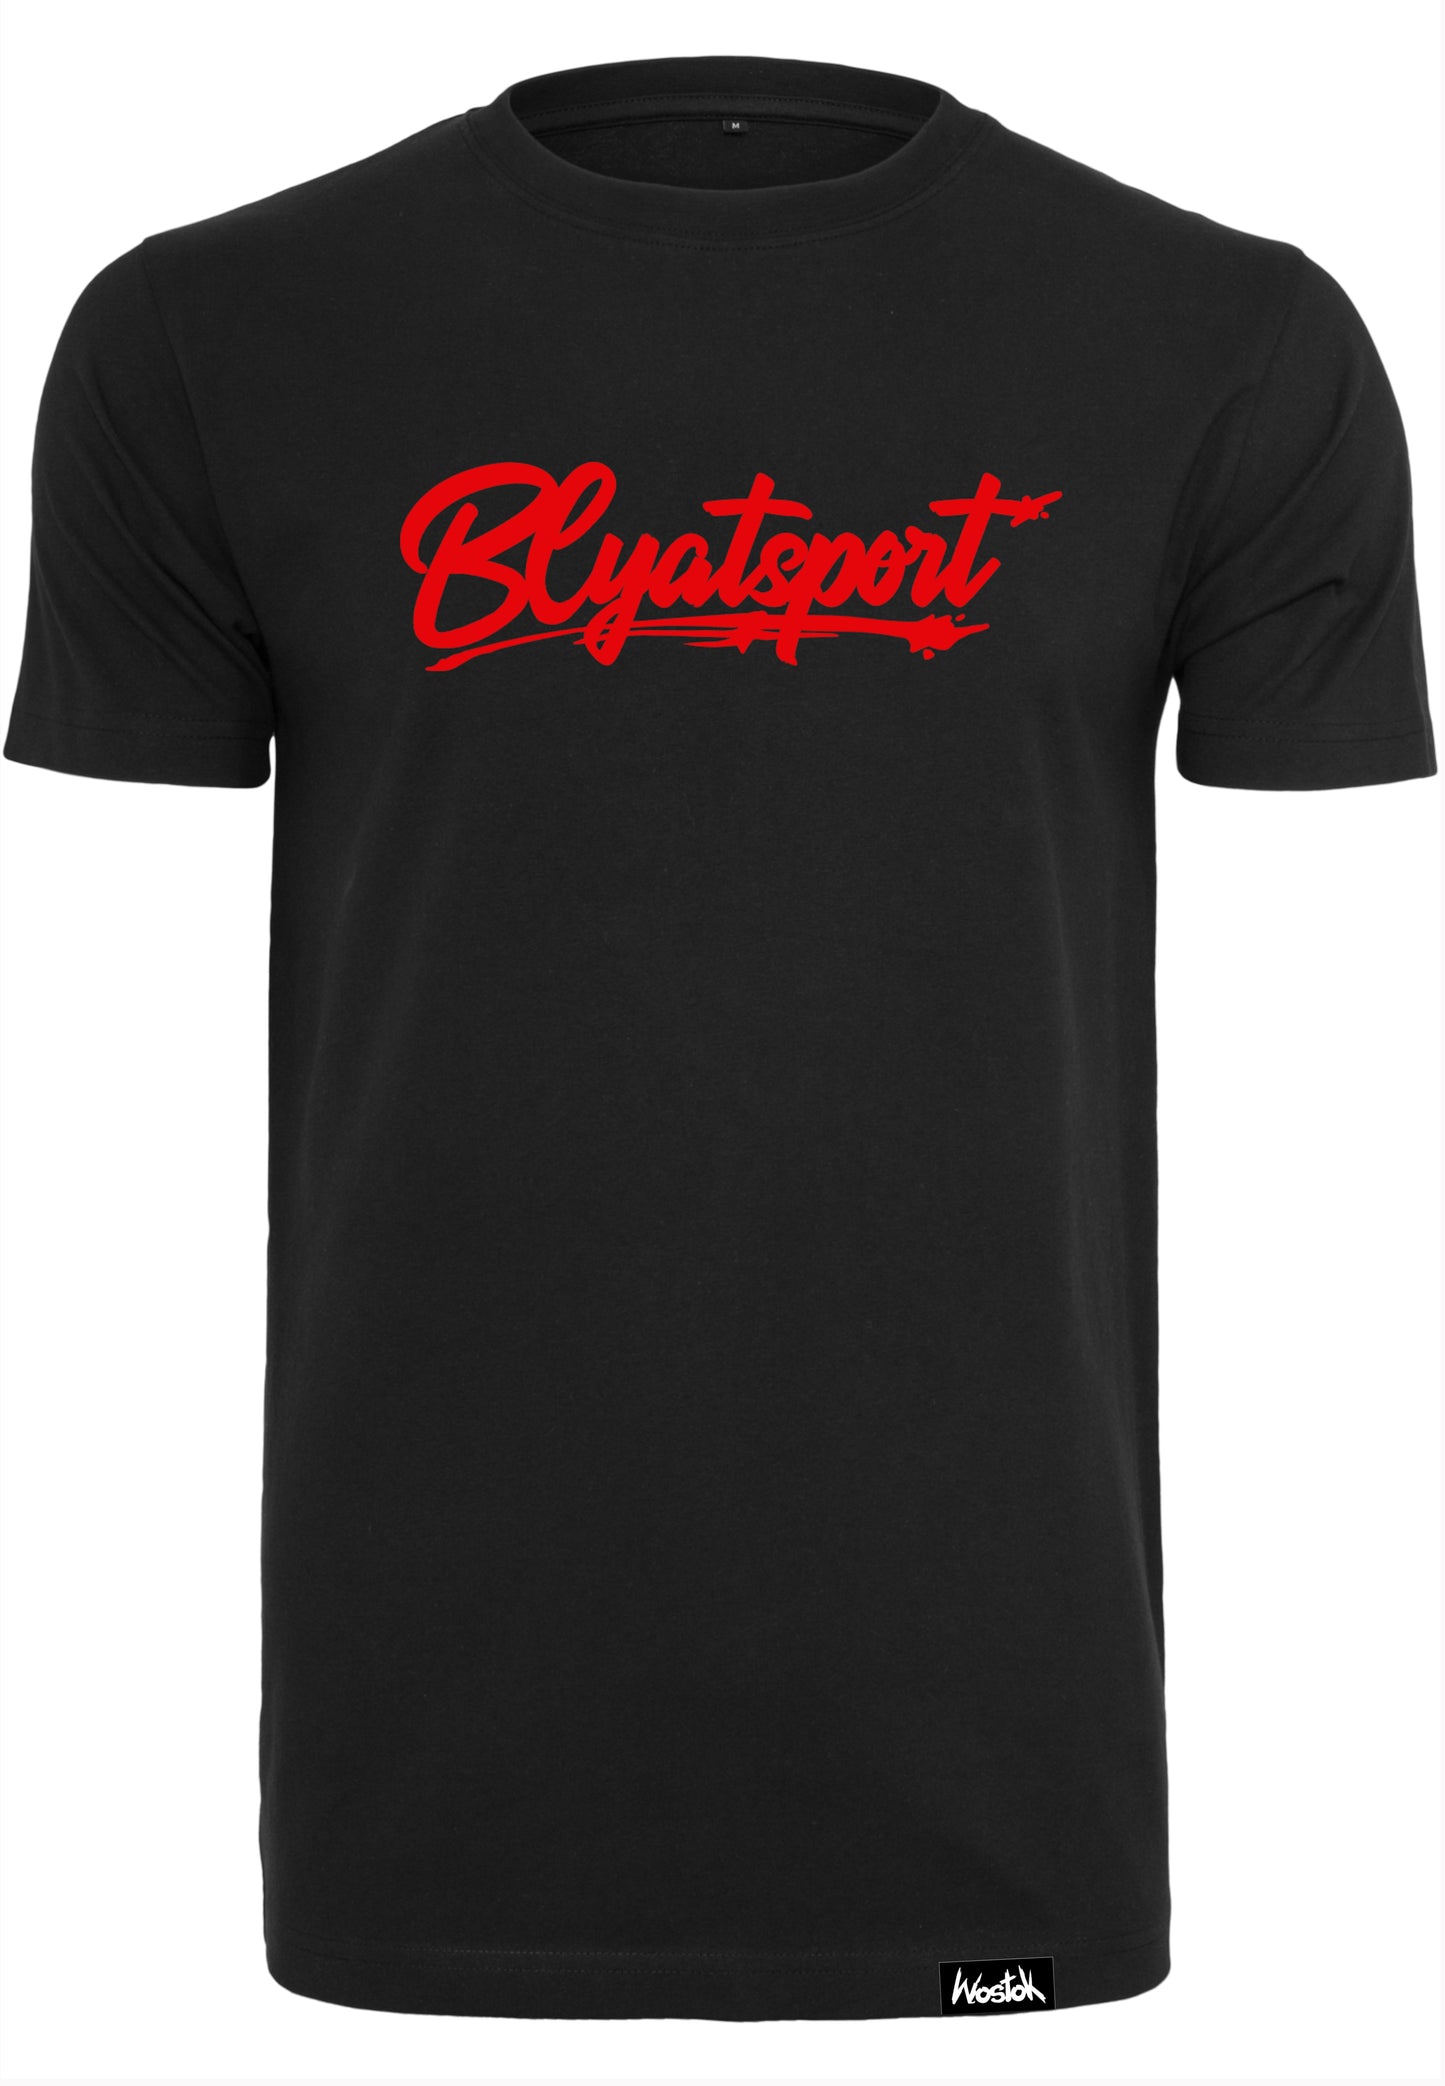 Blyatsport® T-Shirt